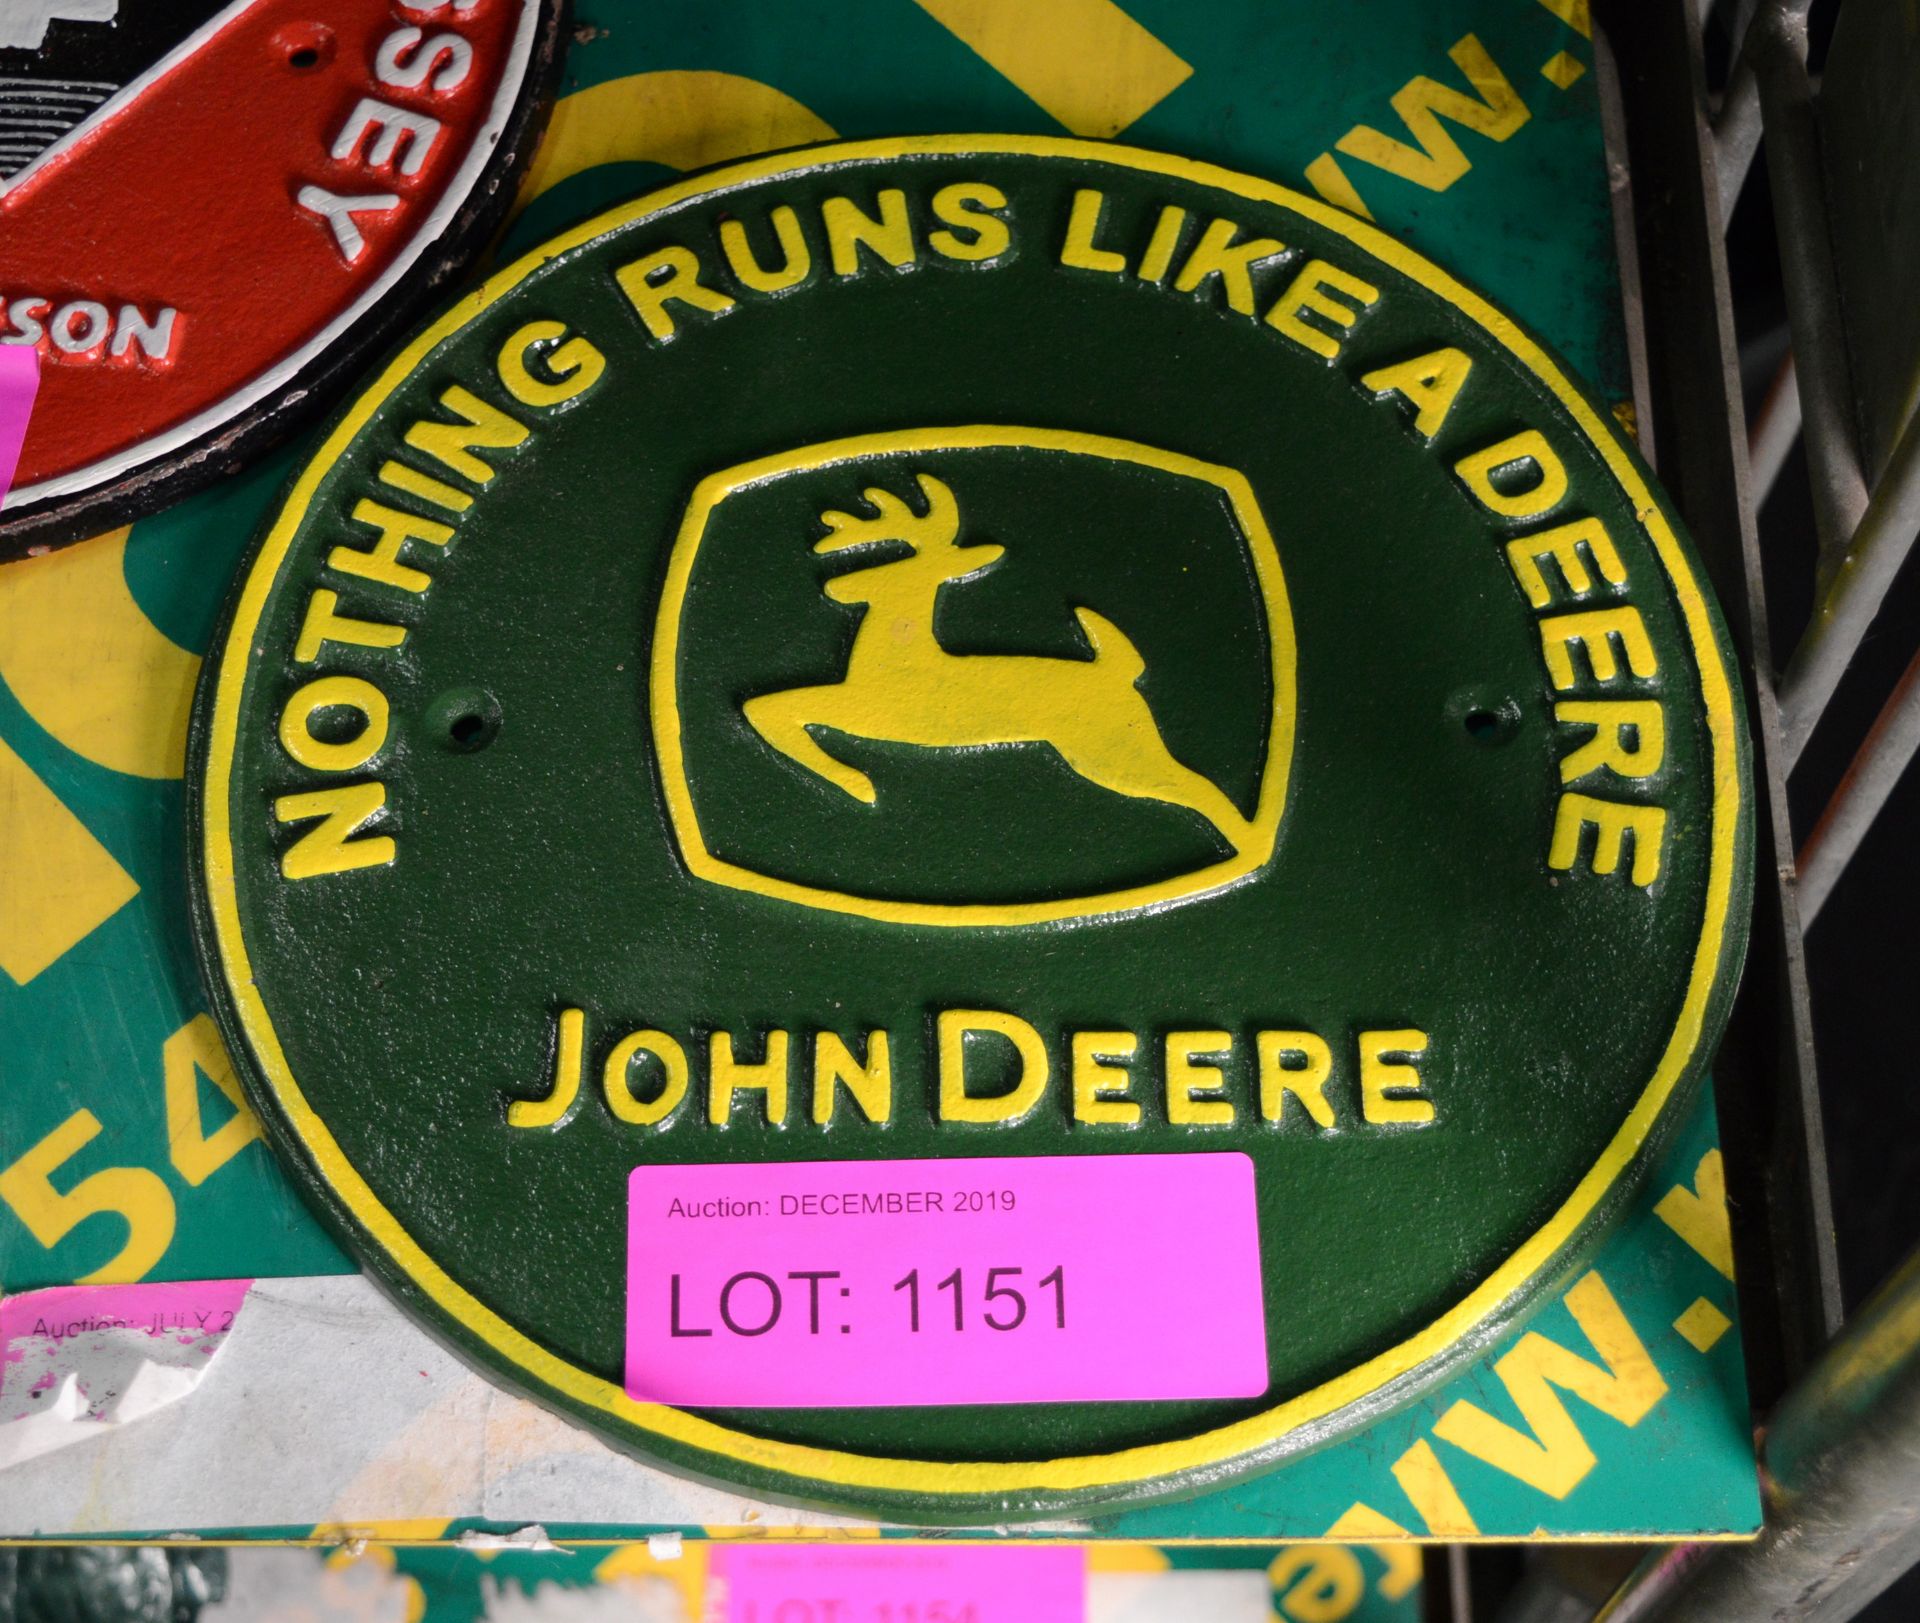 John Deere Cast Sign.